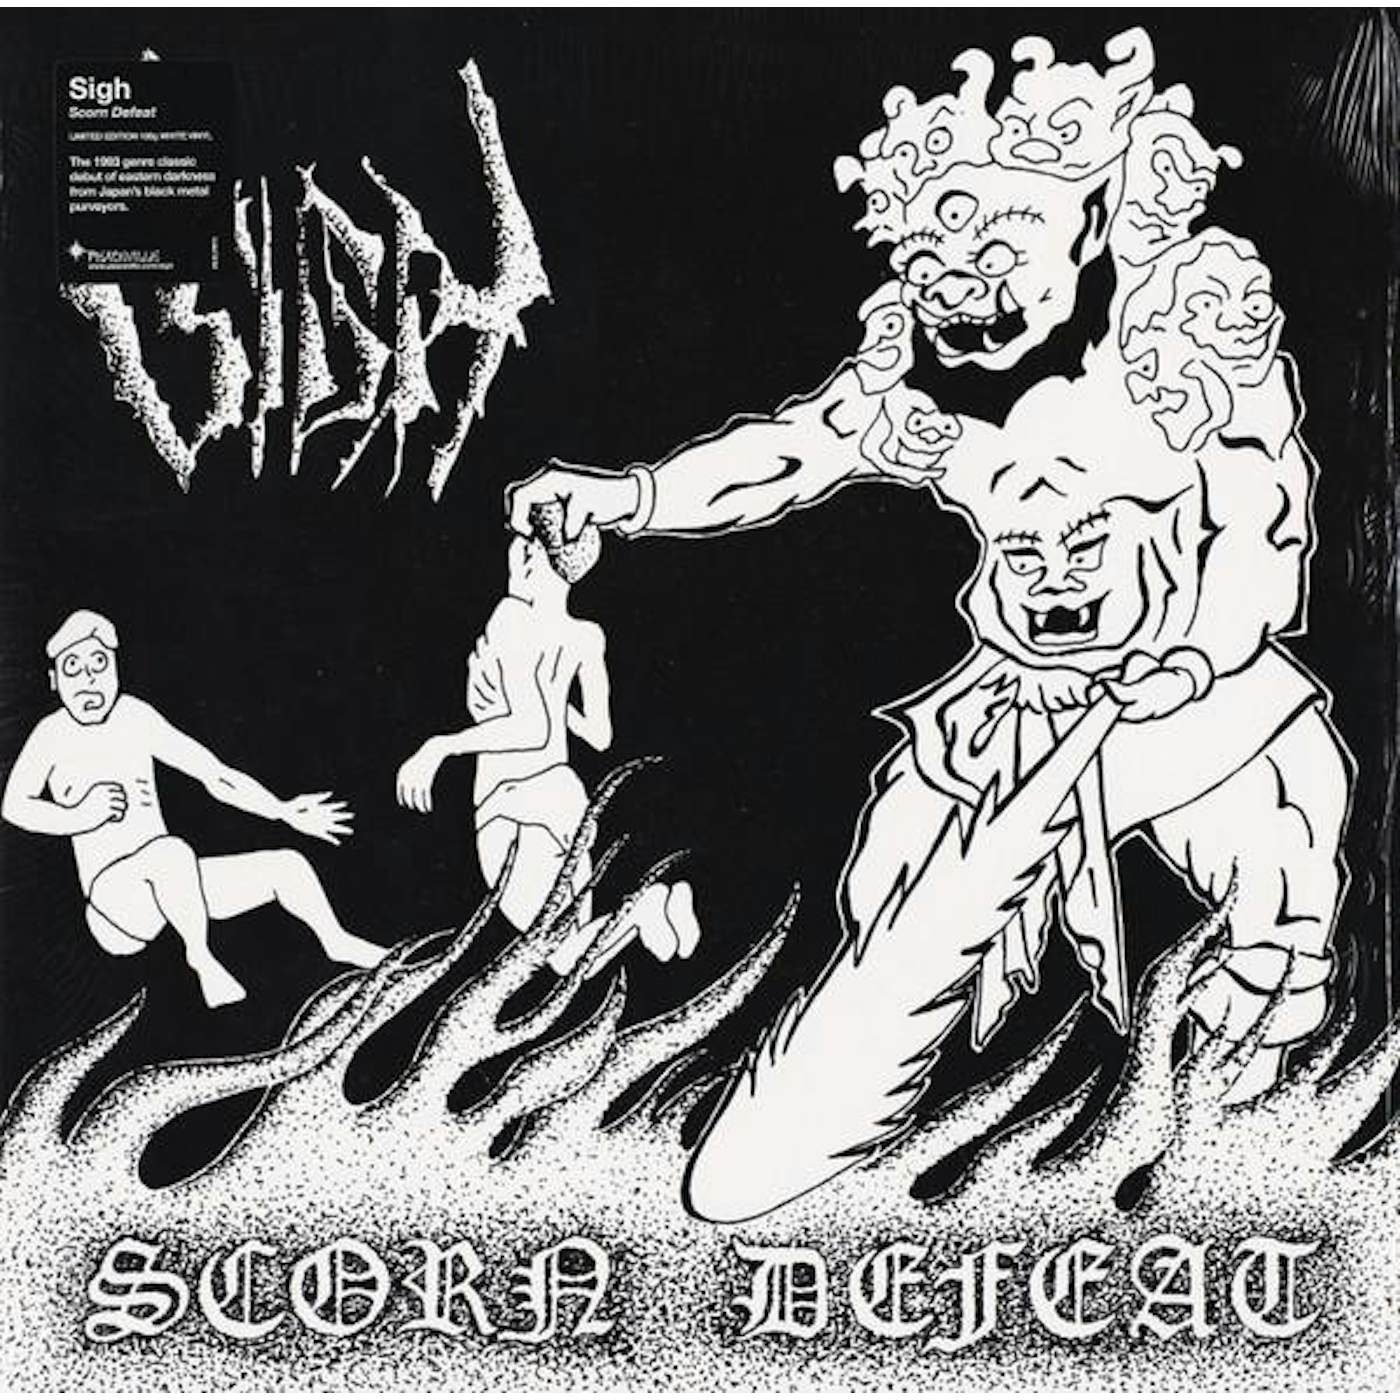 Sigh SCORN DEFEAT (180G/WHITE VINYL) Vinyl Record